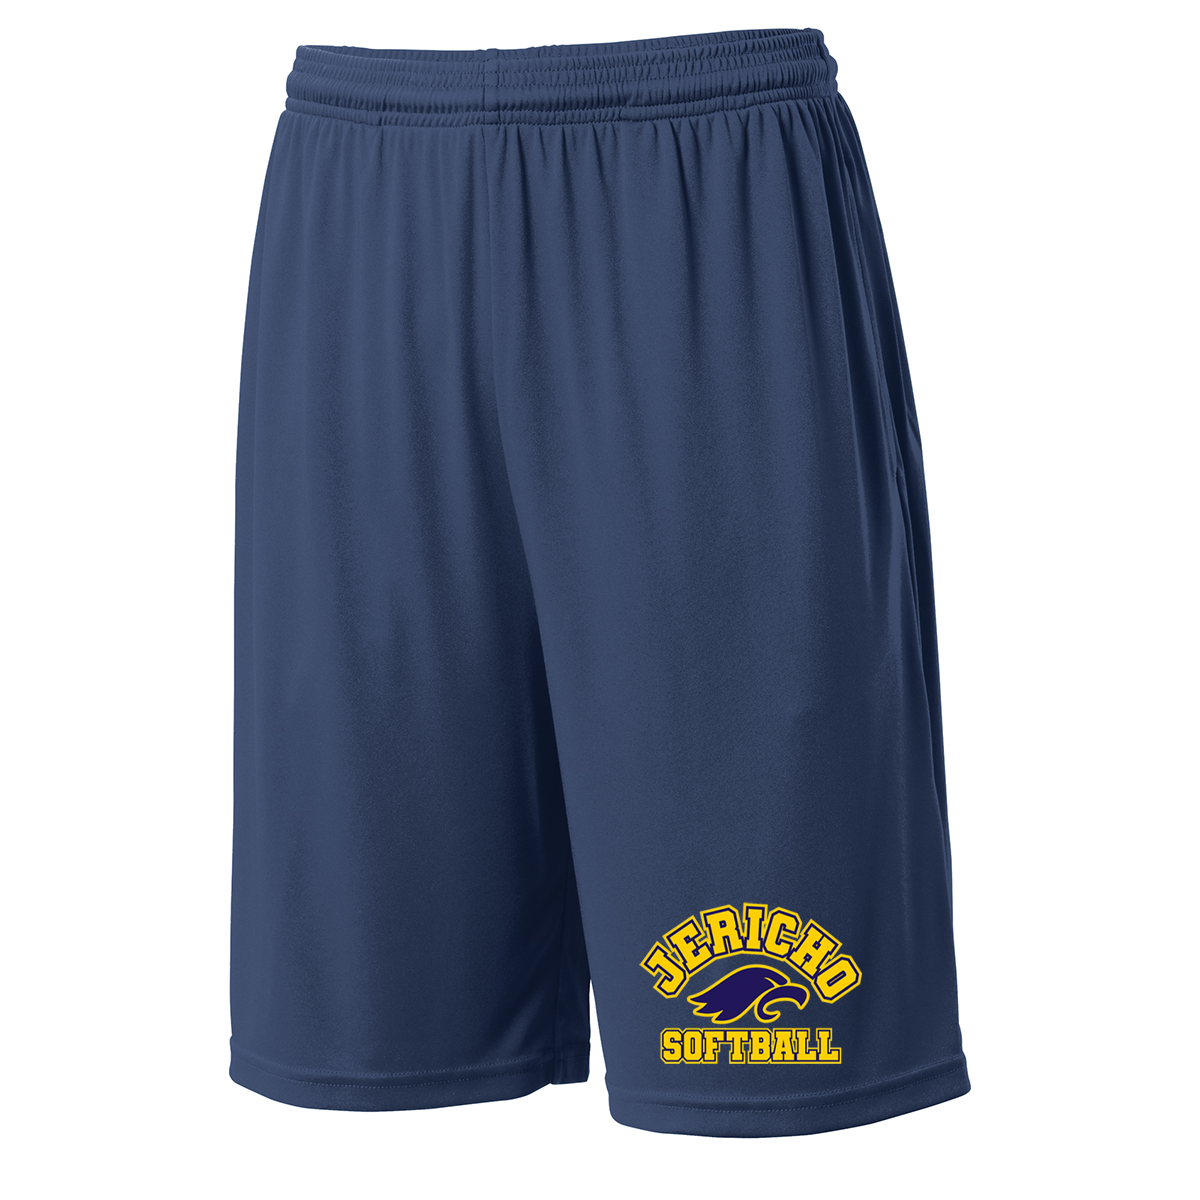 Jericho HS Softball Shorts